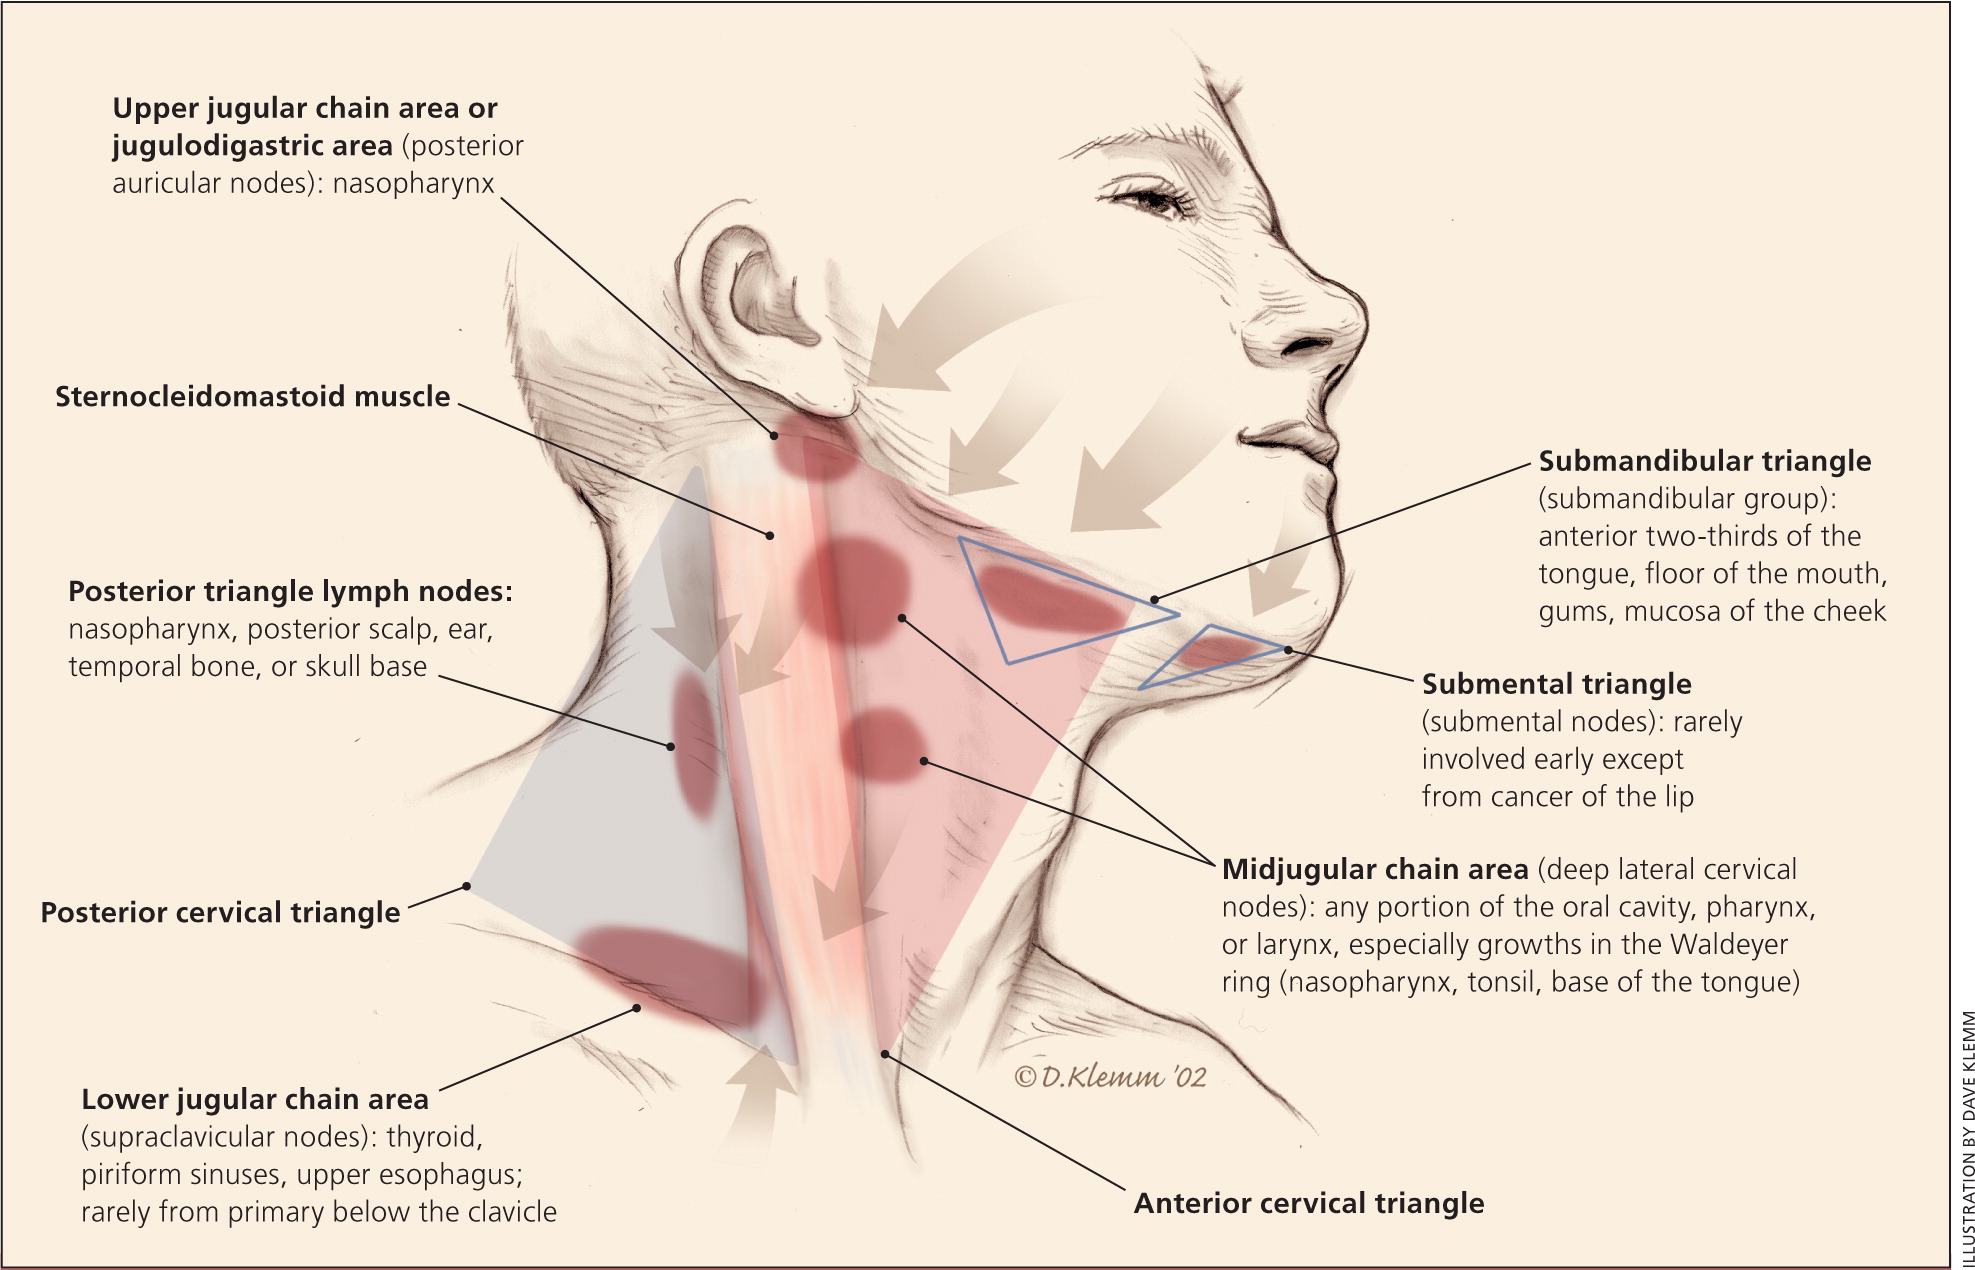 pea sized lymph node back of neck